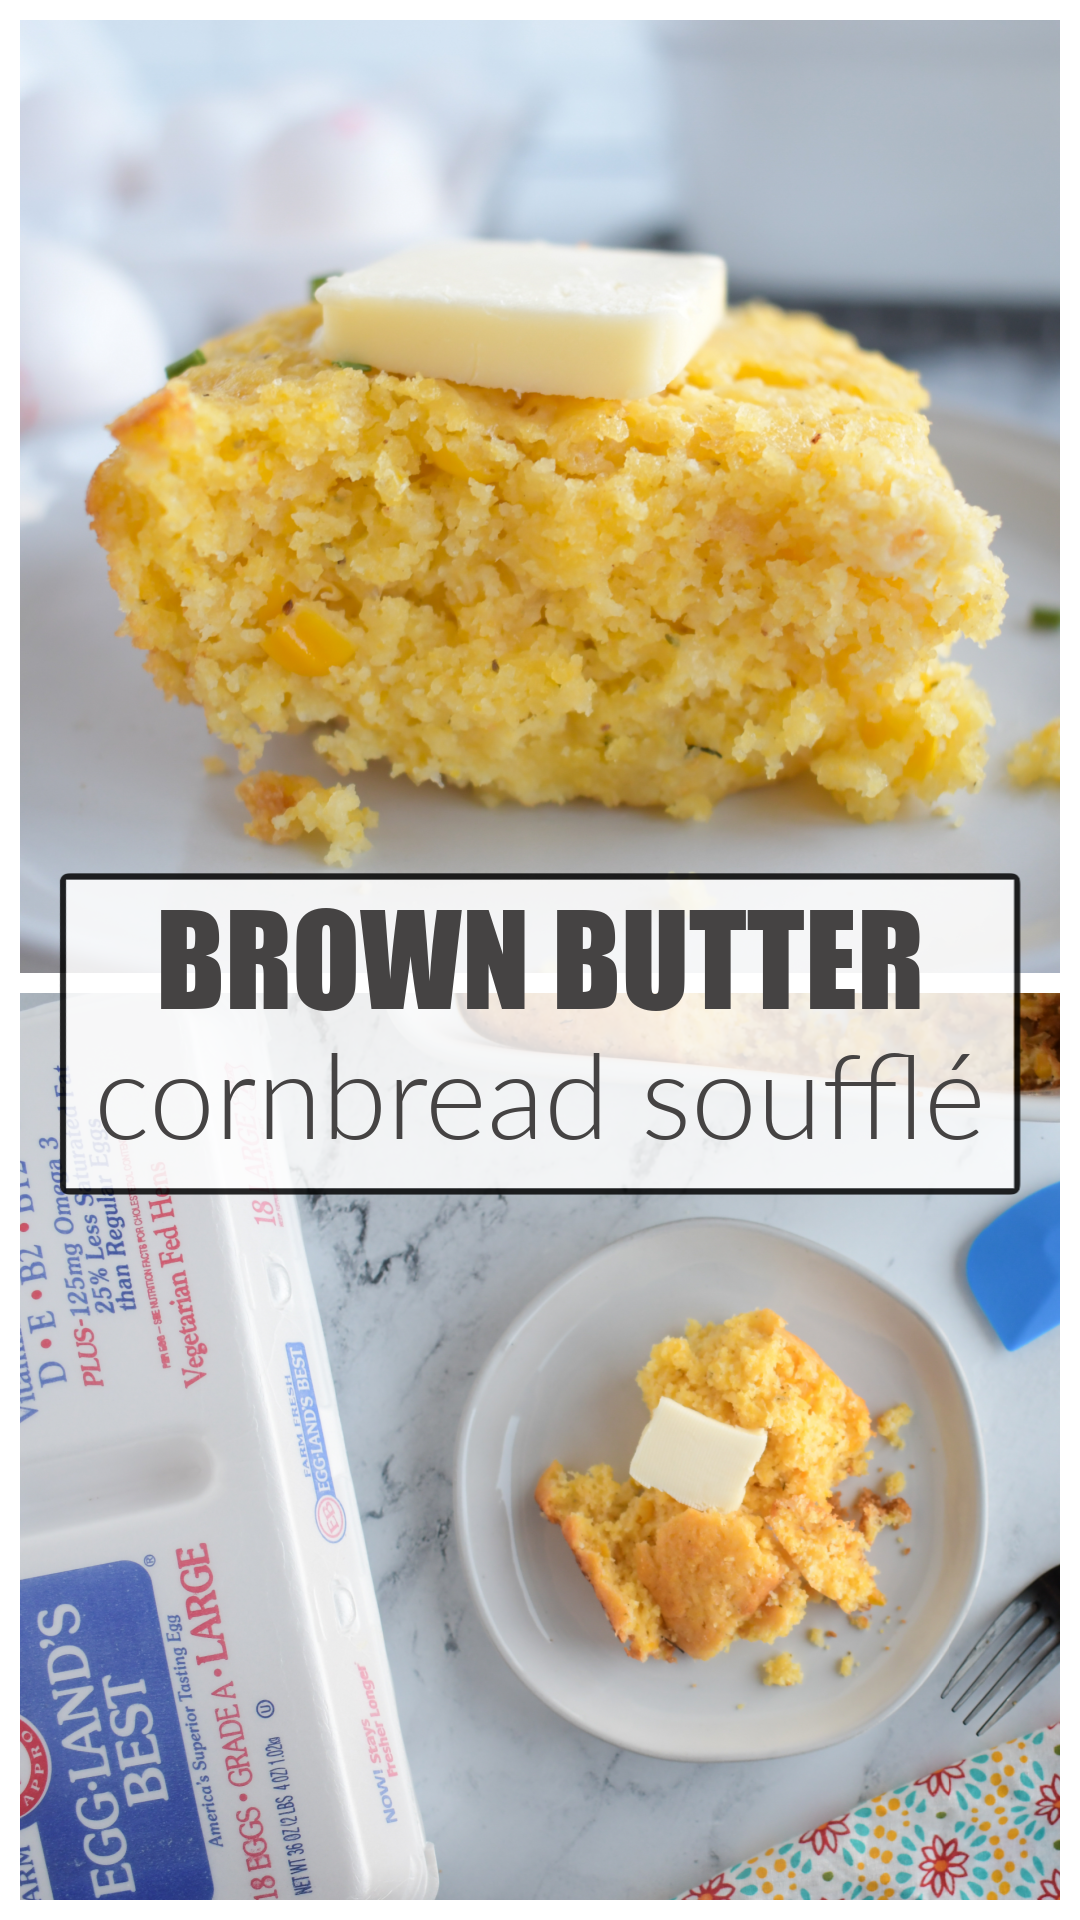 https://makethebestofeverything.com/wp-content/uploads/2022/11/Brown-Butter-Cornbread-Souffle.png